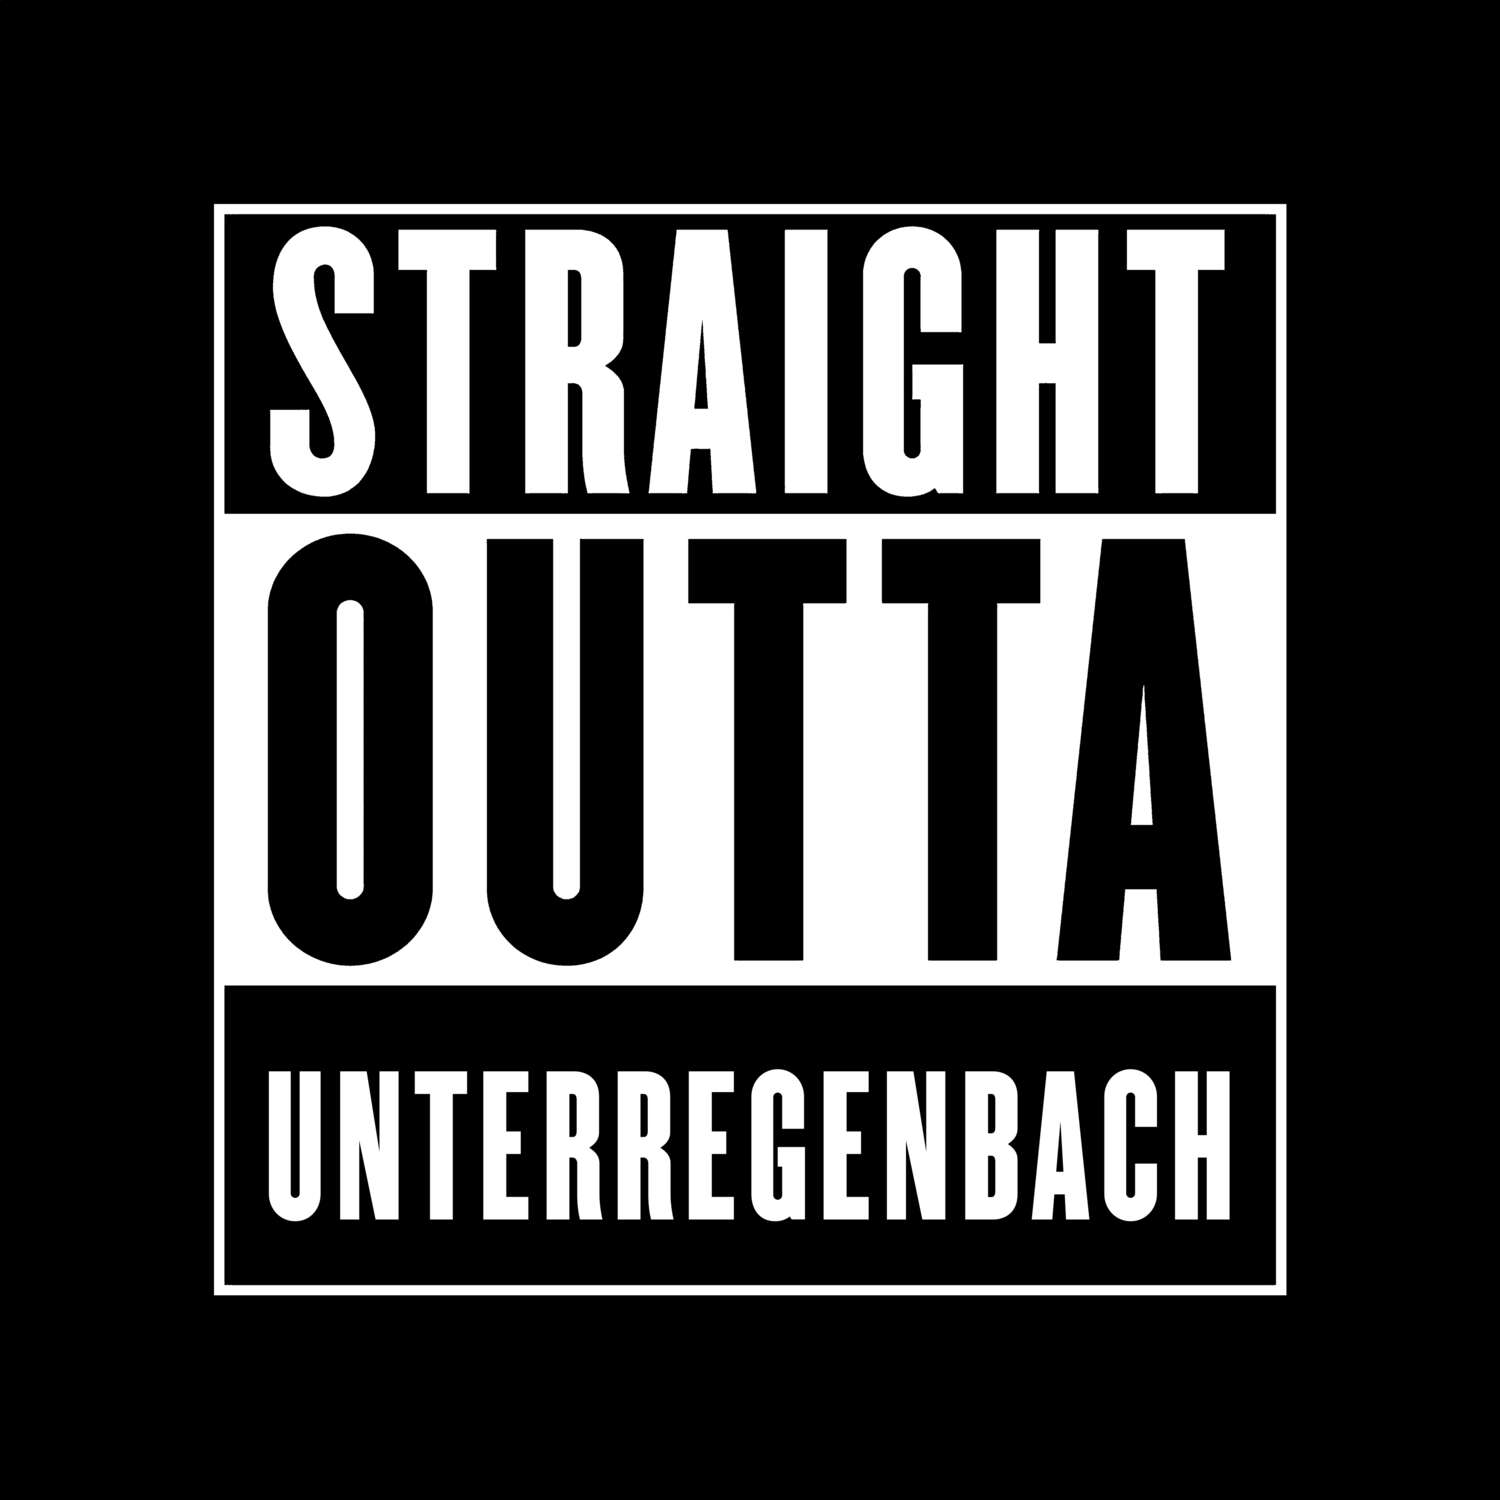 Unterregenbach T-Shirt »Straight Outta«